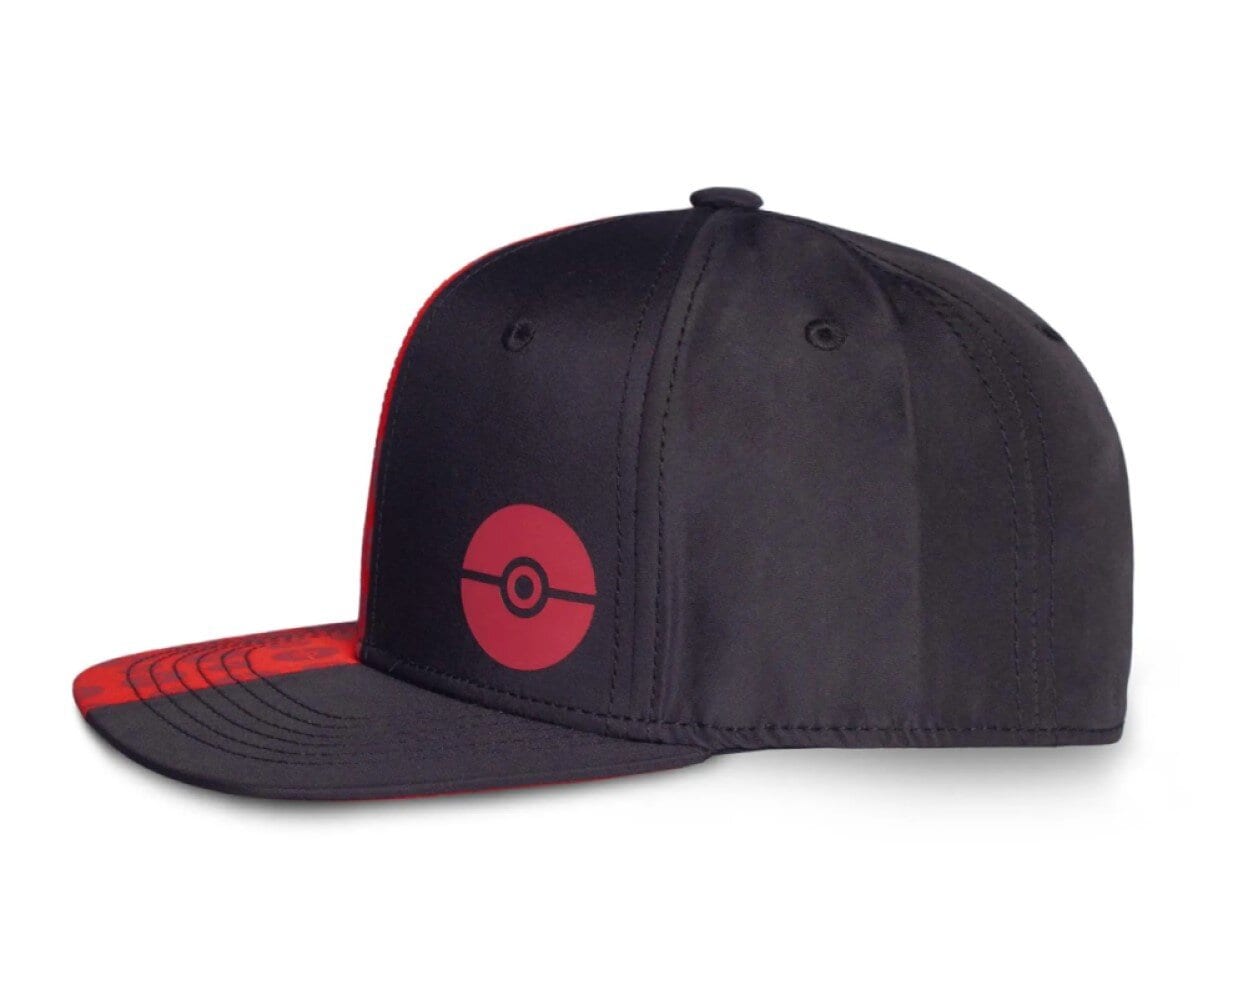 Pokémon - Pokeball Caps Snapback